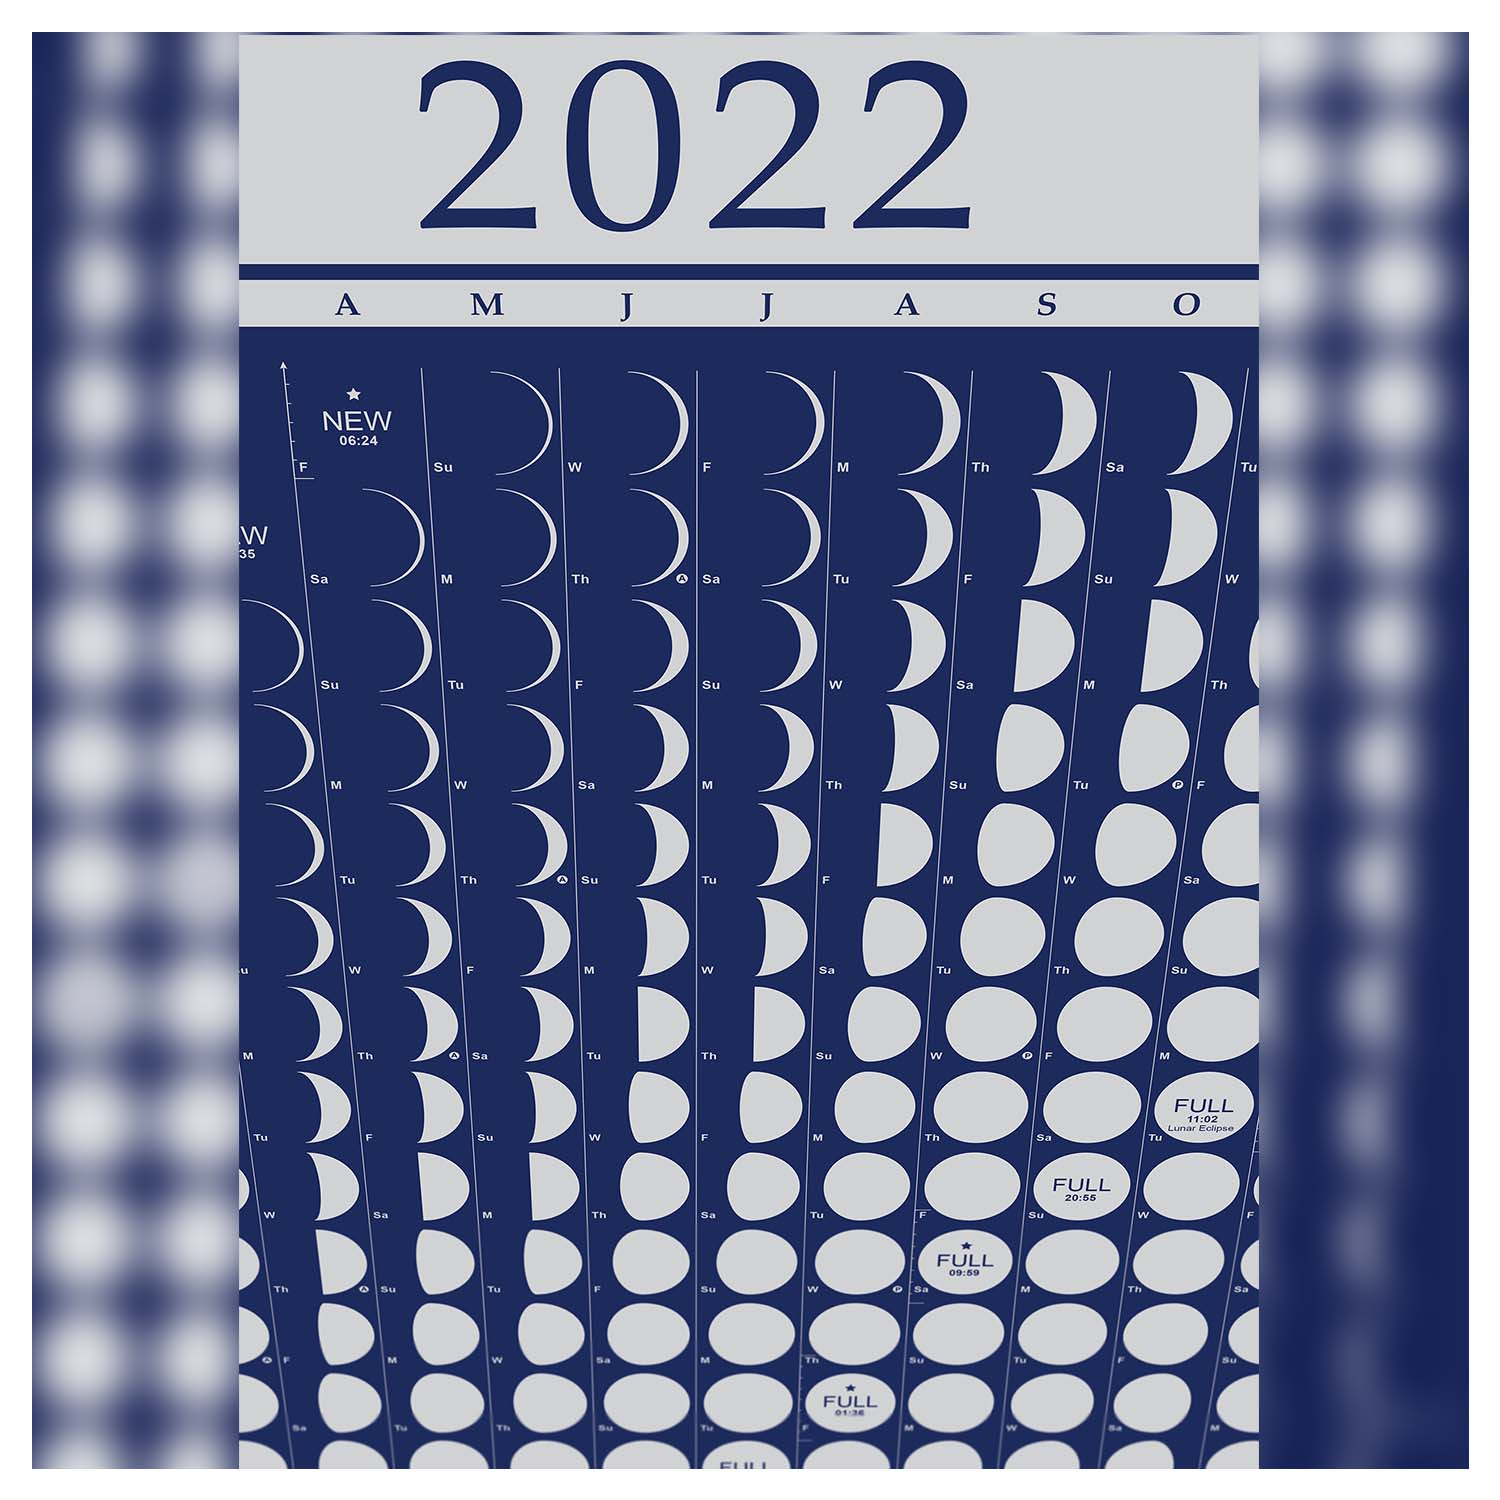 Full Moon Calendar 2022 California Moonphase Calendar 2022